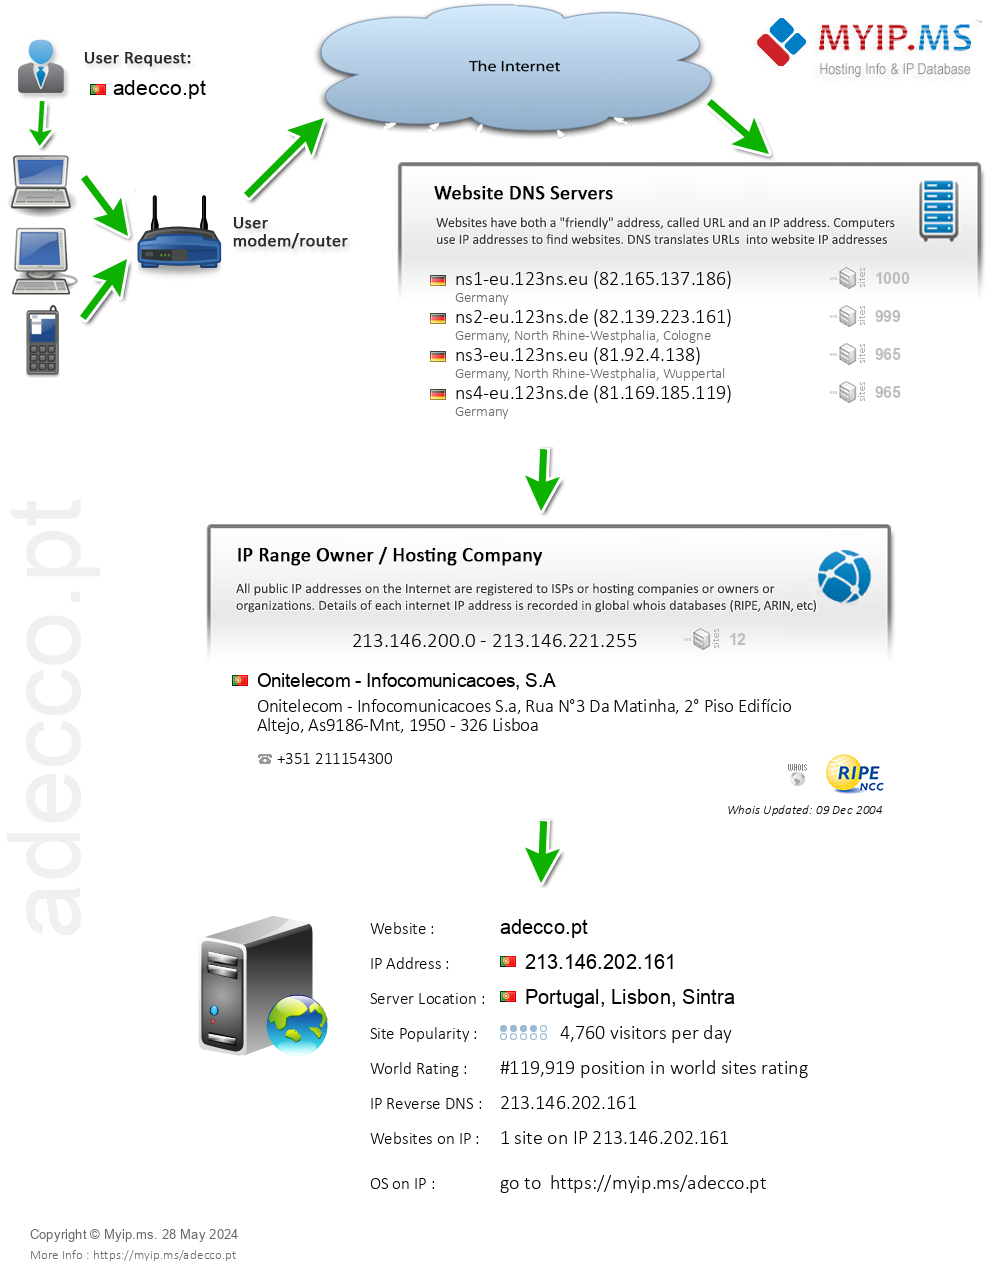 Adecco.pt - Website Hosting Visual IP Diagram